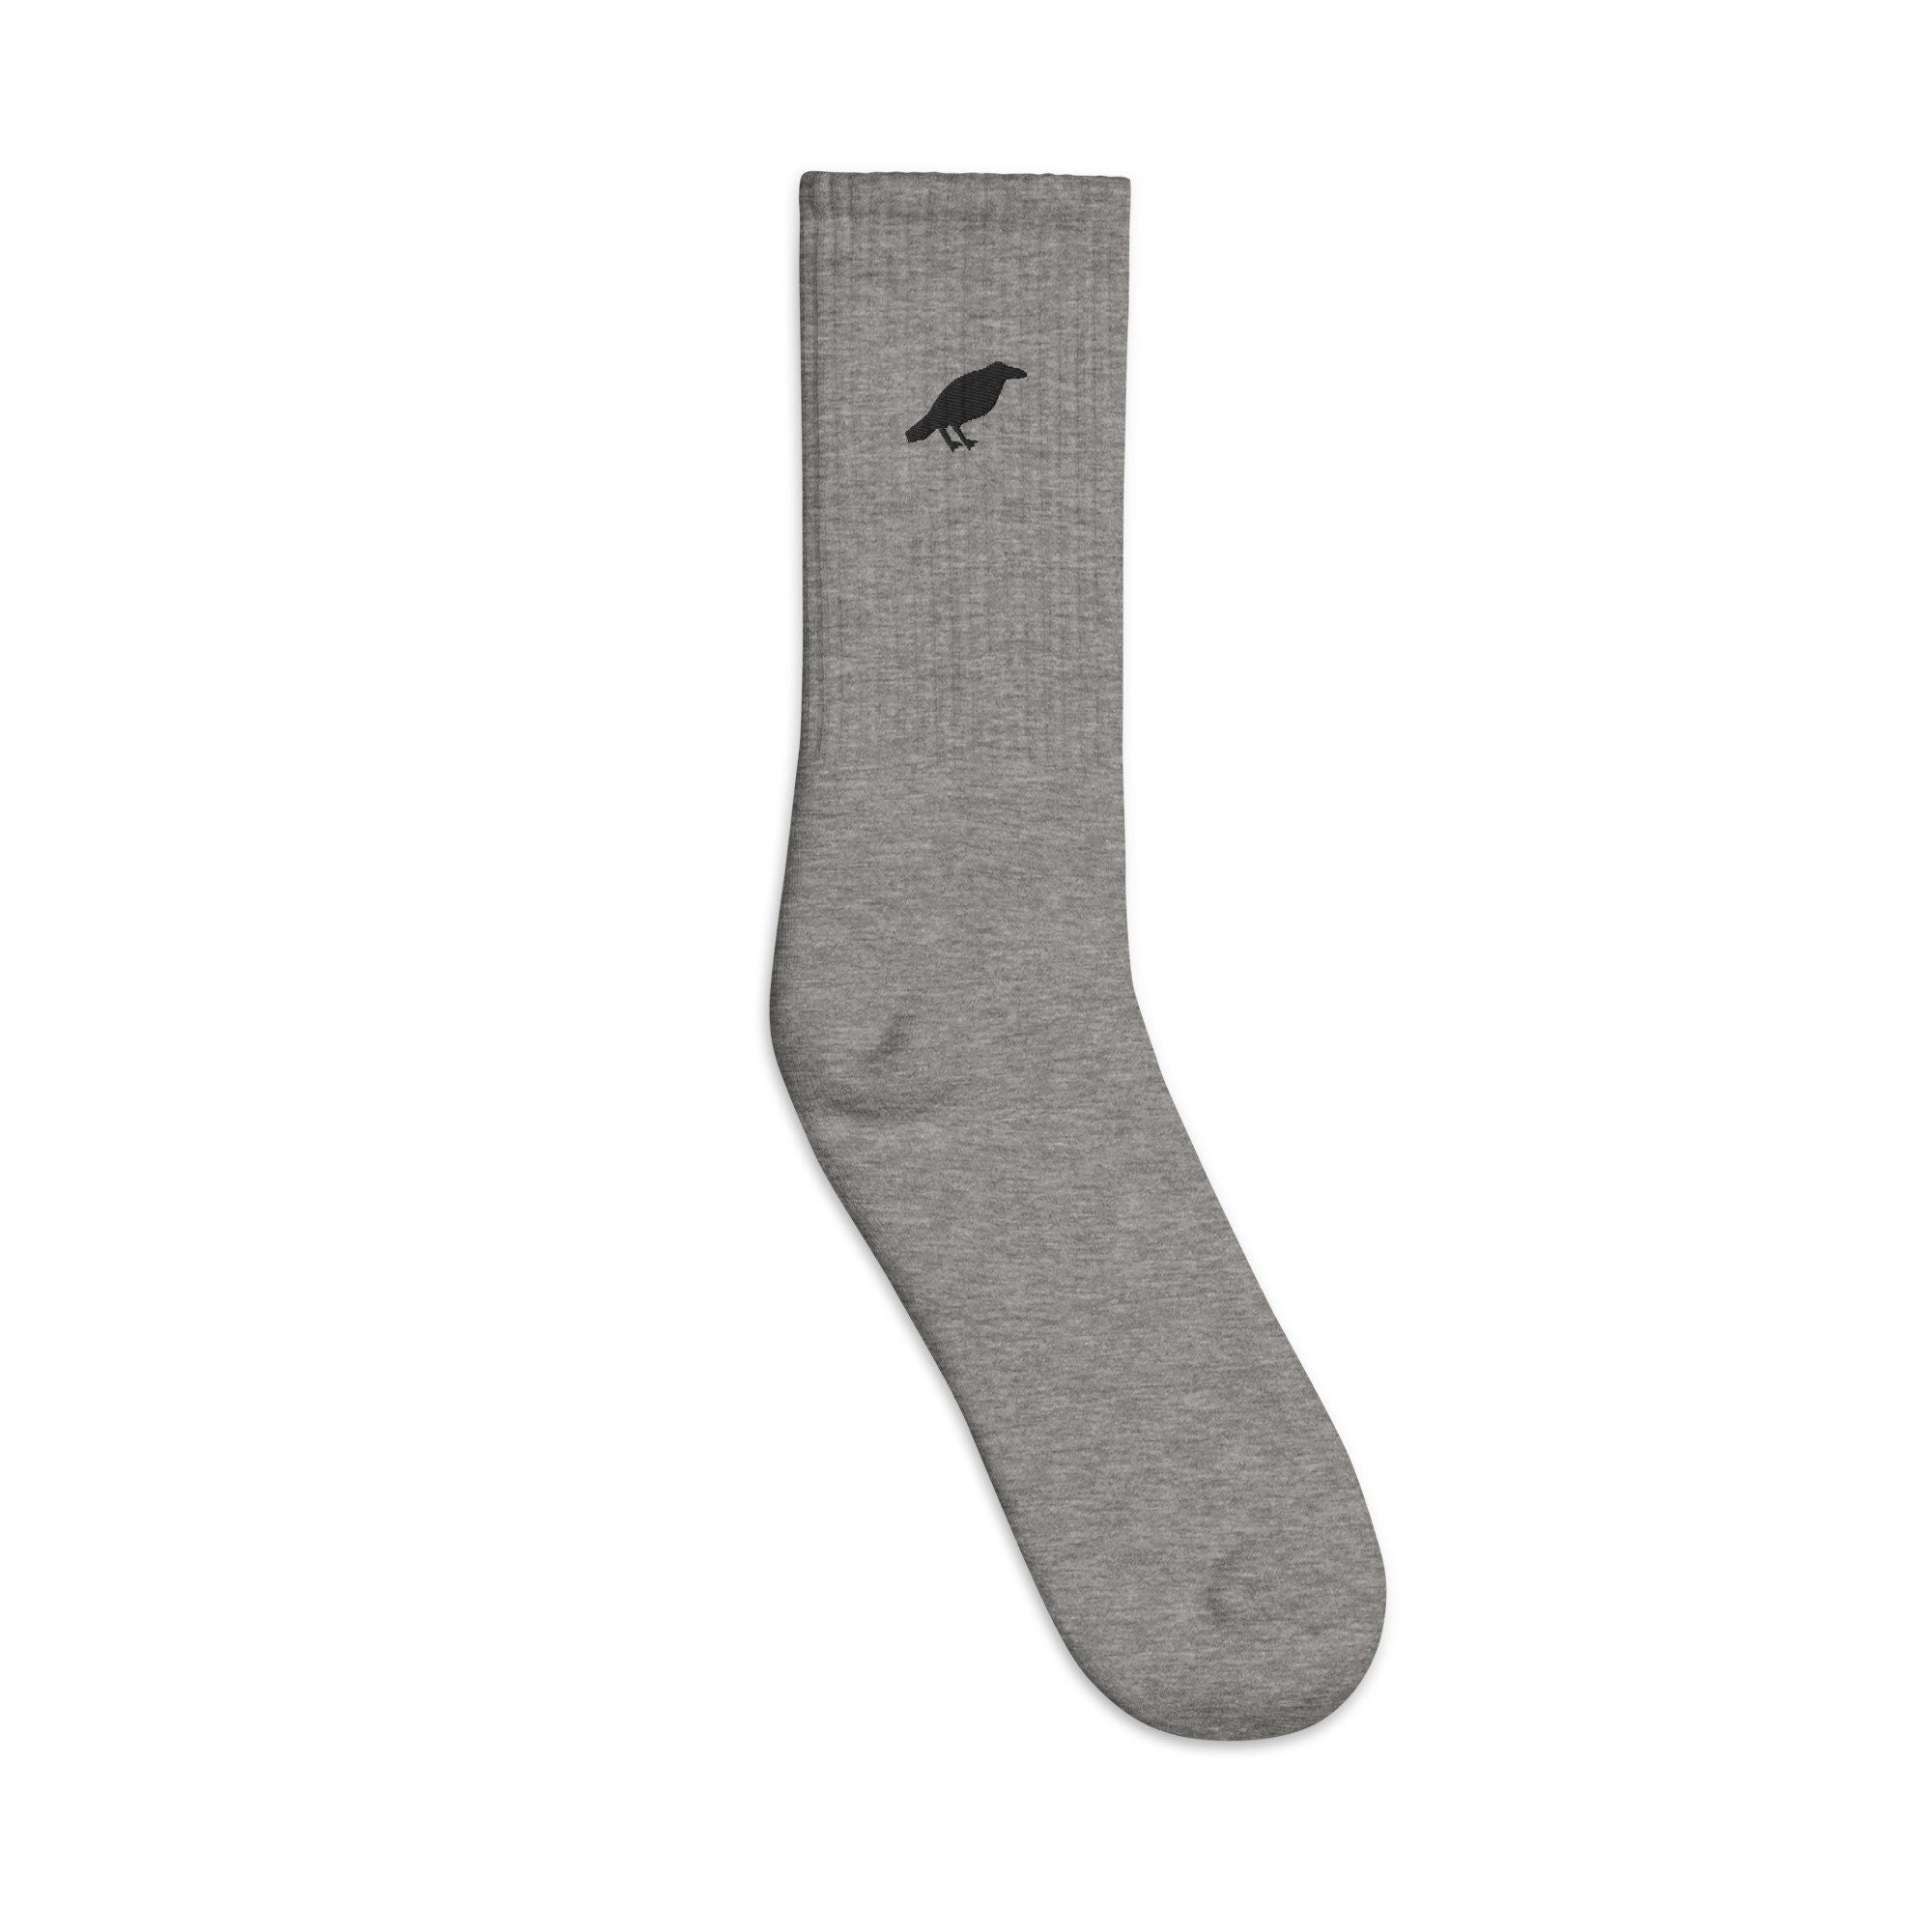 Crow Embroidered Socks, Premium Embroidered Socks, Long Socks Gift - Multiple Colors